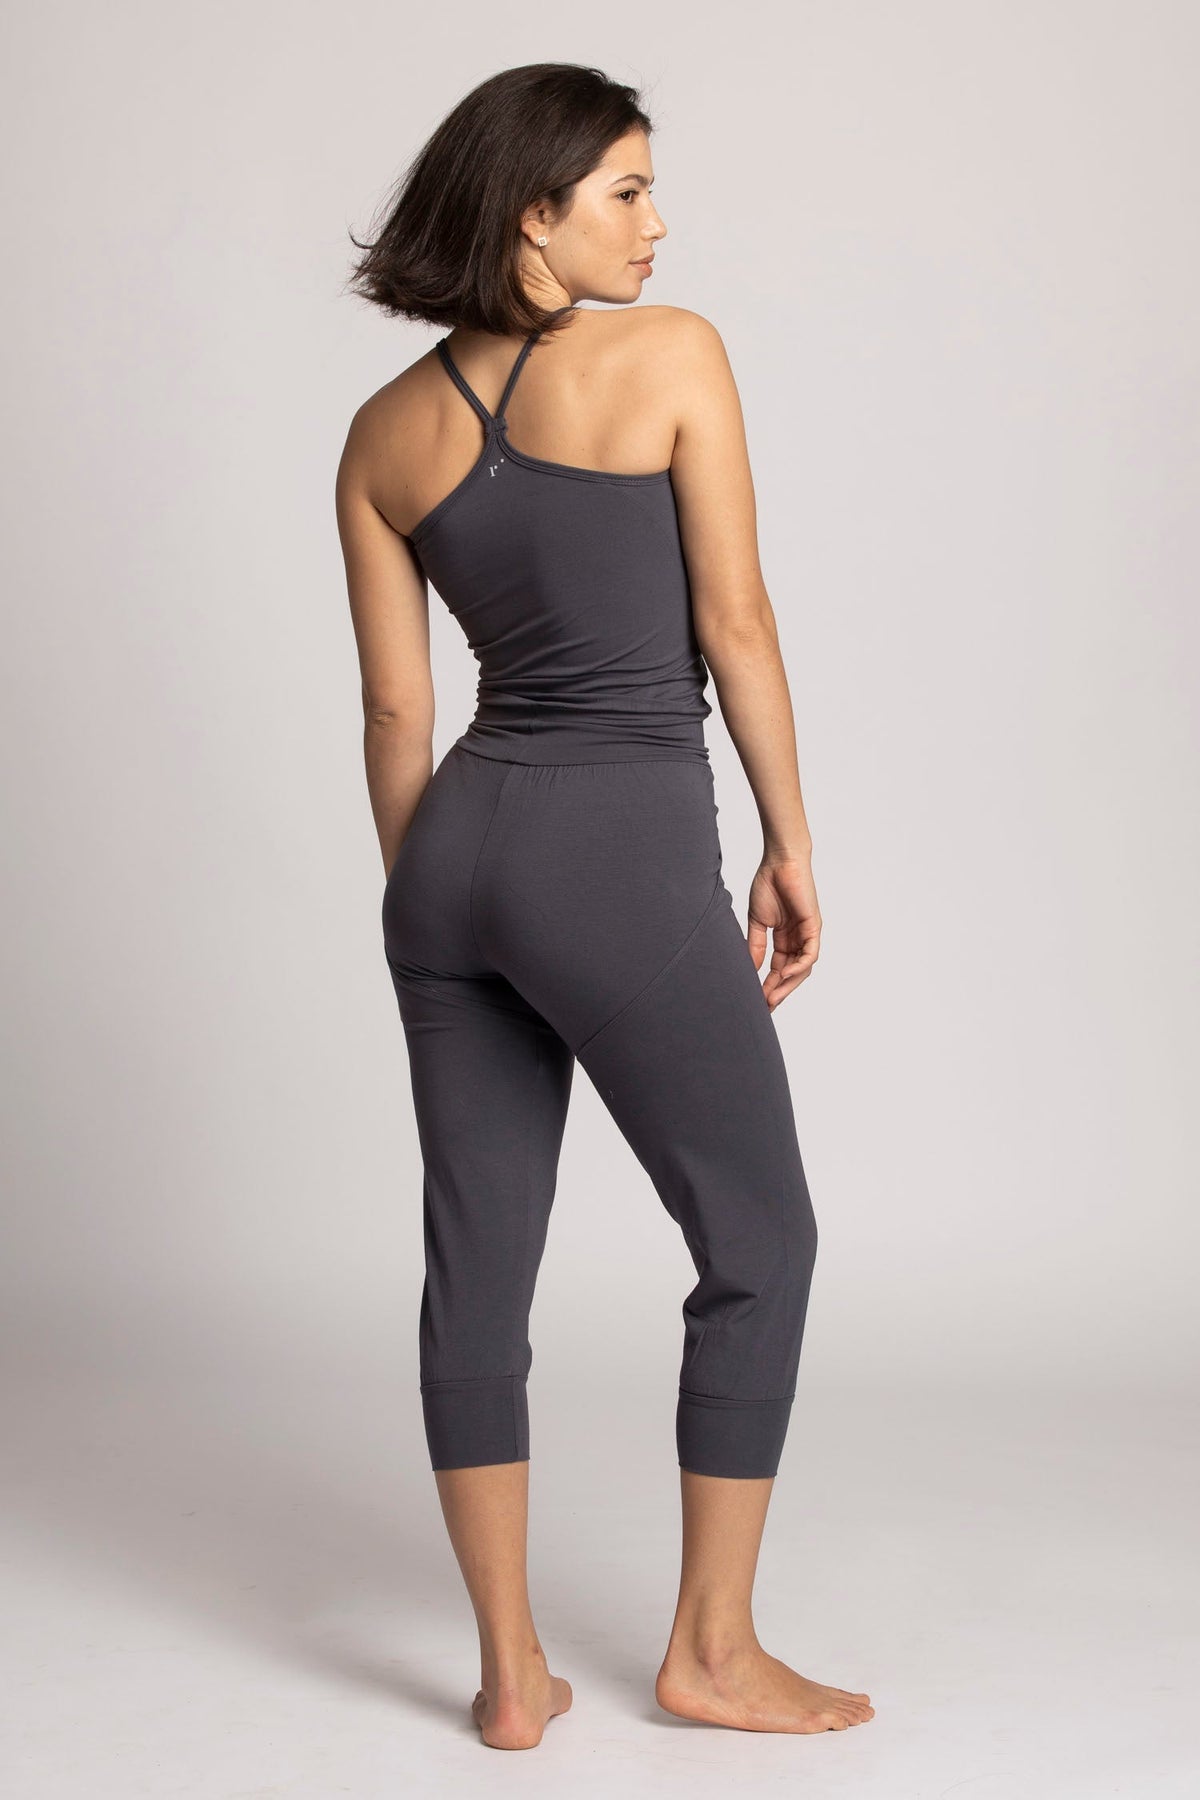 Yoga Jumpsuit womens clothing Ripple Yoga Wear 